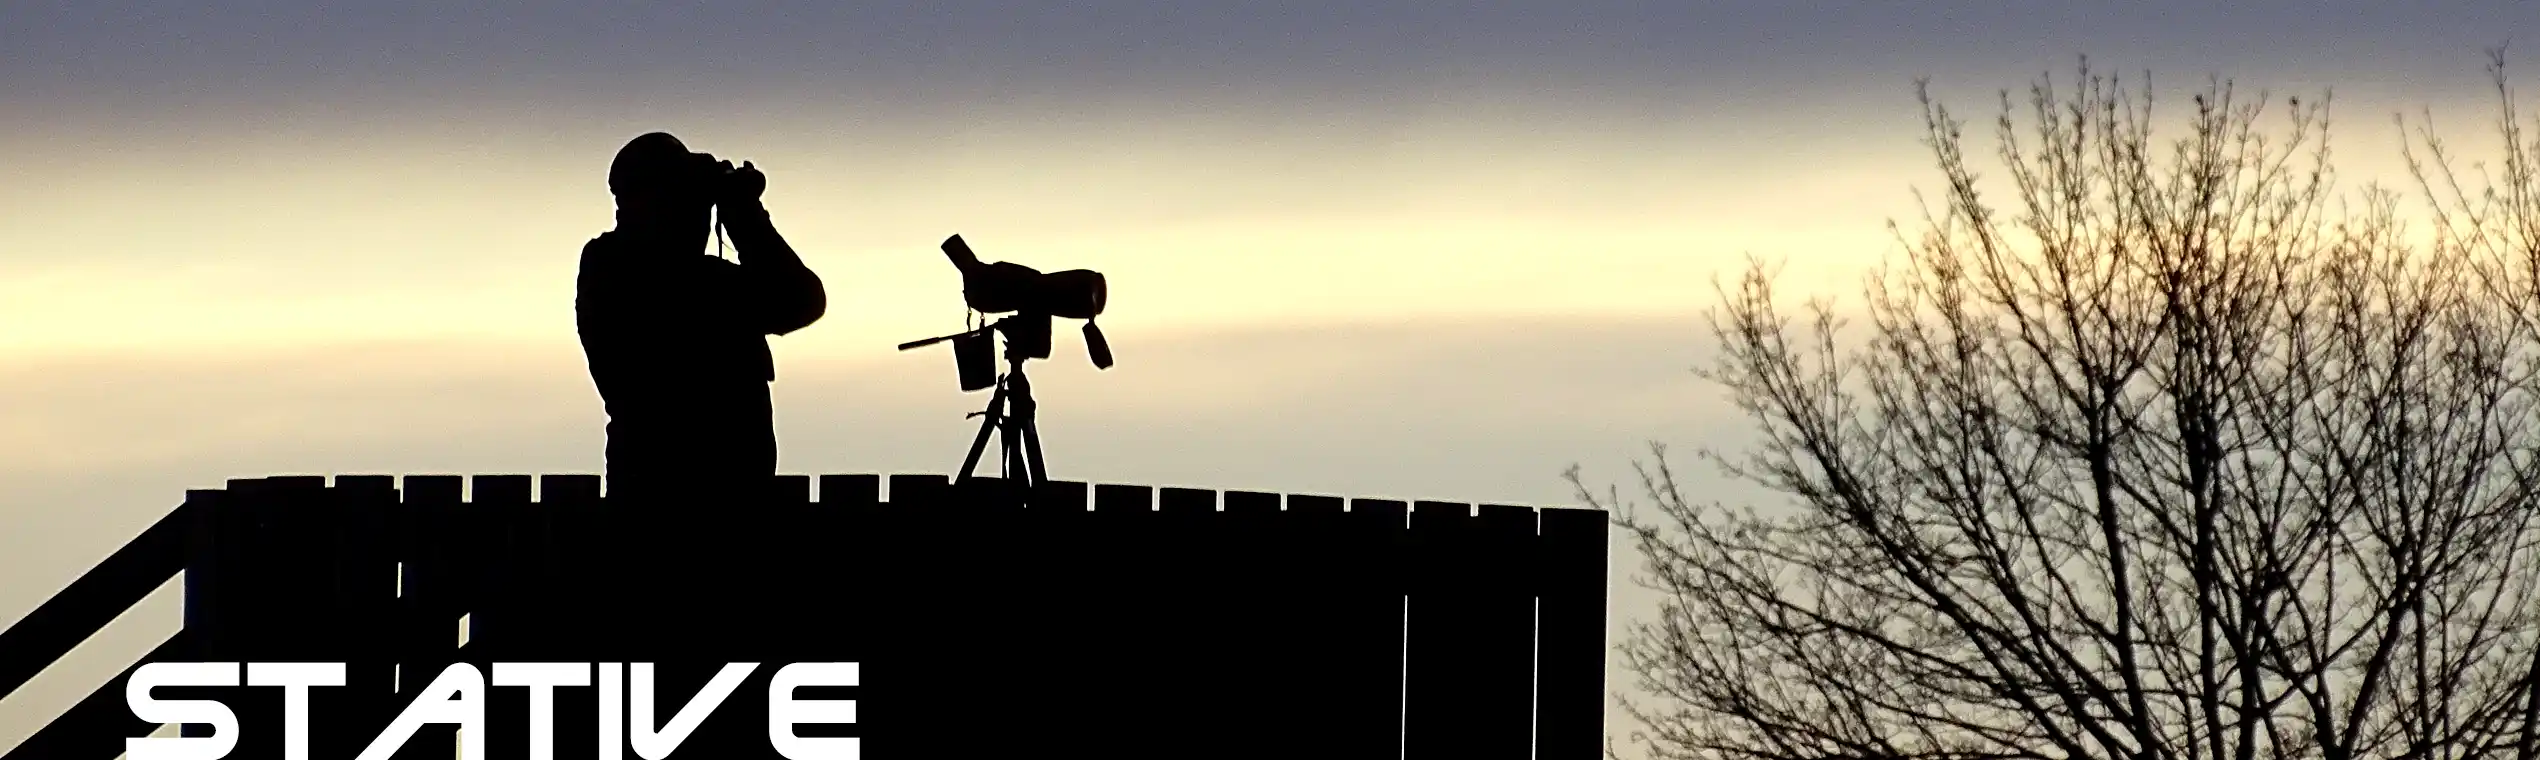 DDoptics tripods for spotting scopes, binoculars and cameras